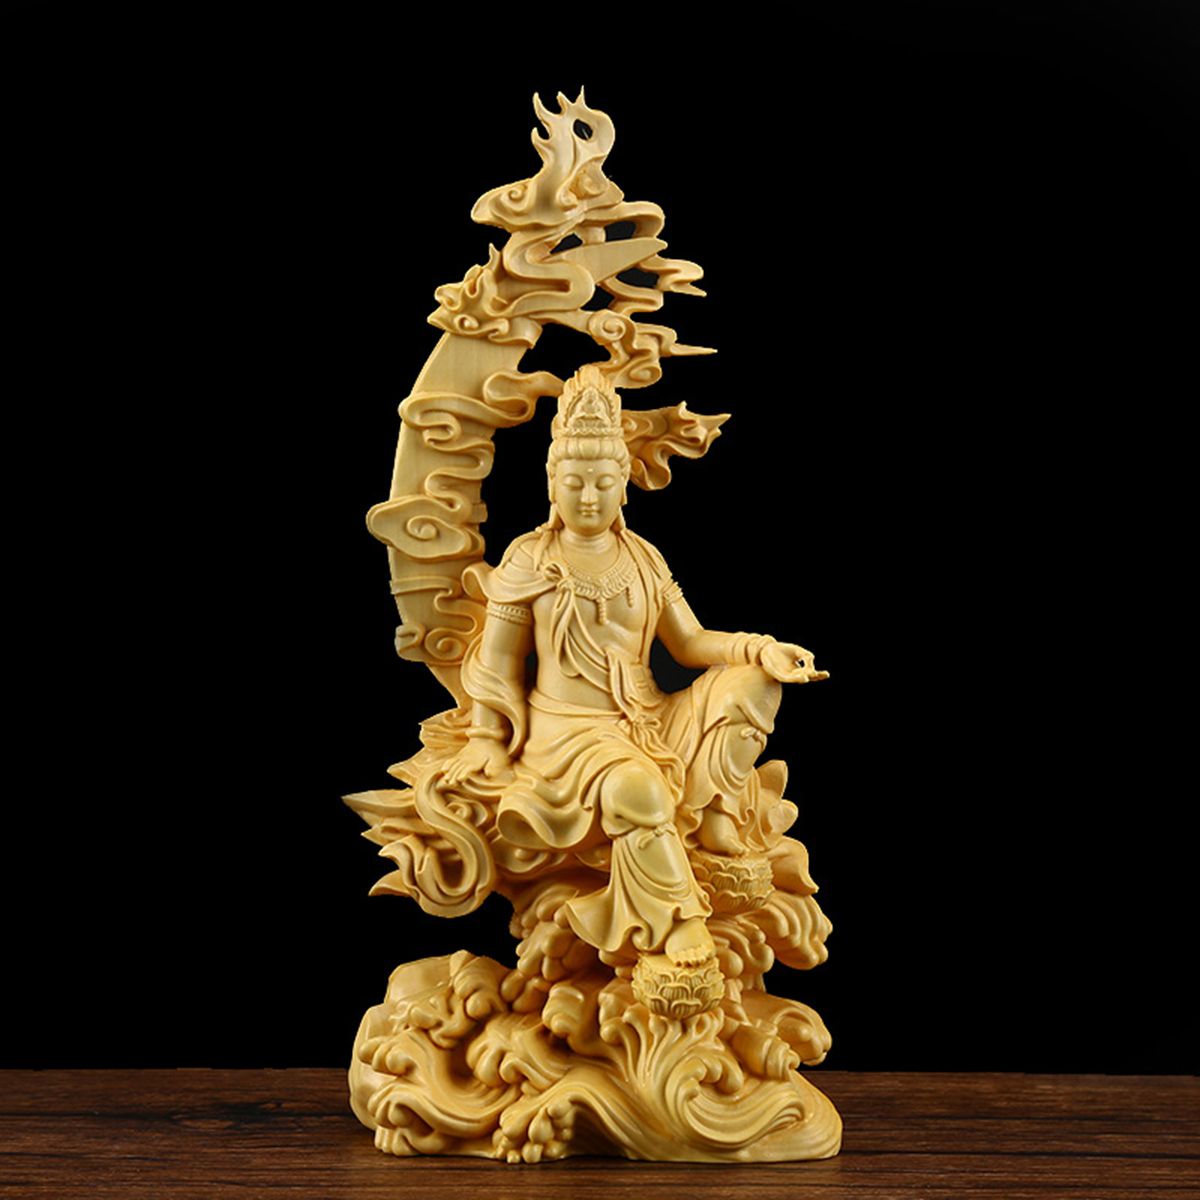 Boxwood-Wood-Carving-Handmade-Bodhisatva-Sculpture-Craft-Decorations-1575298